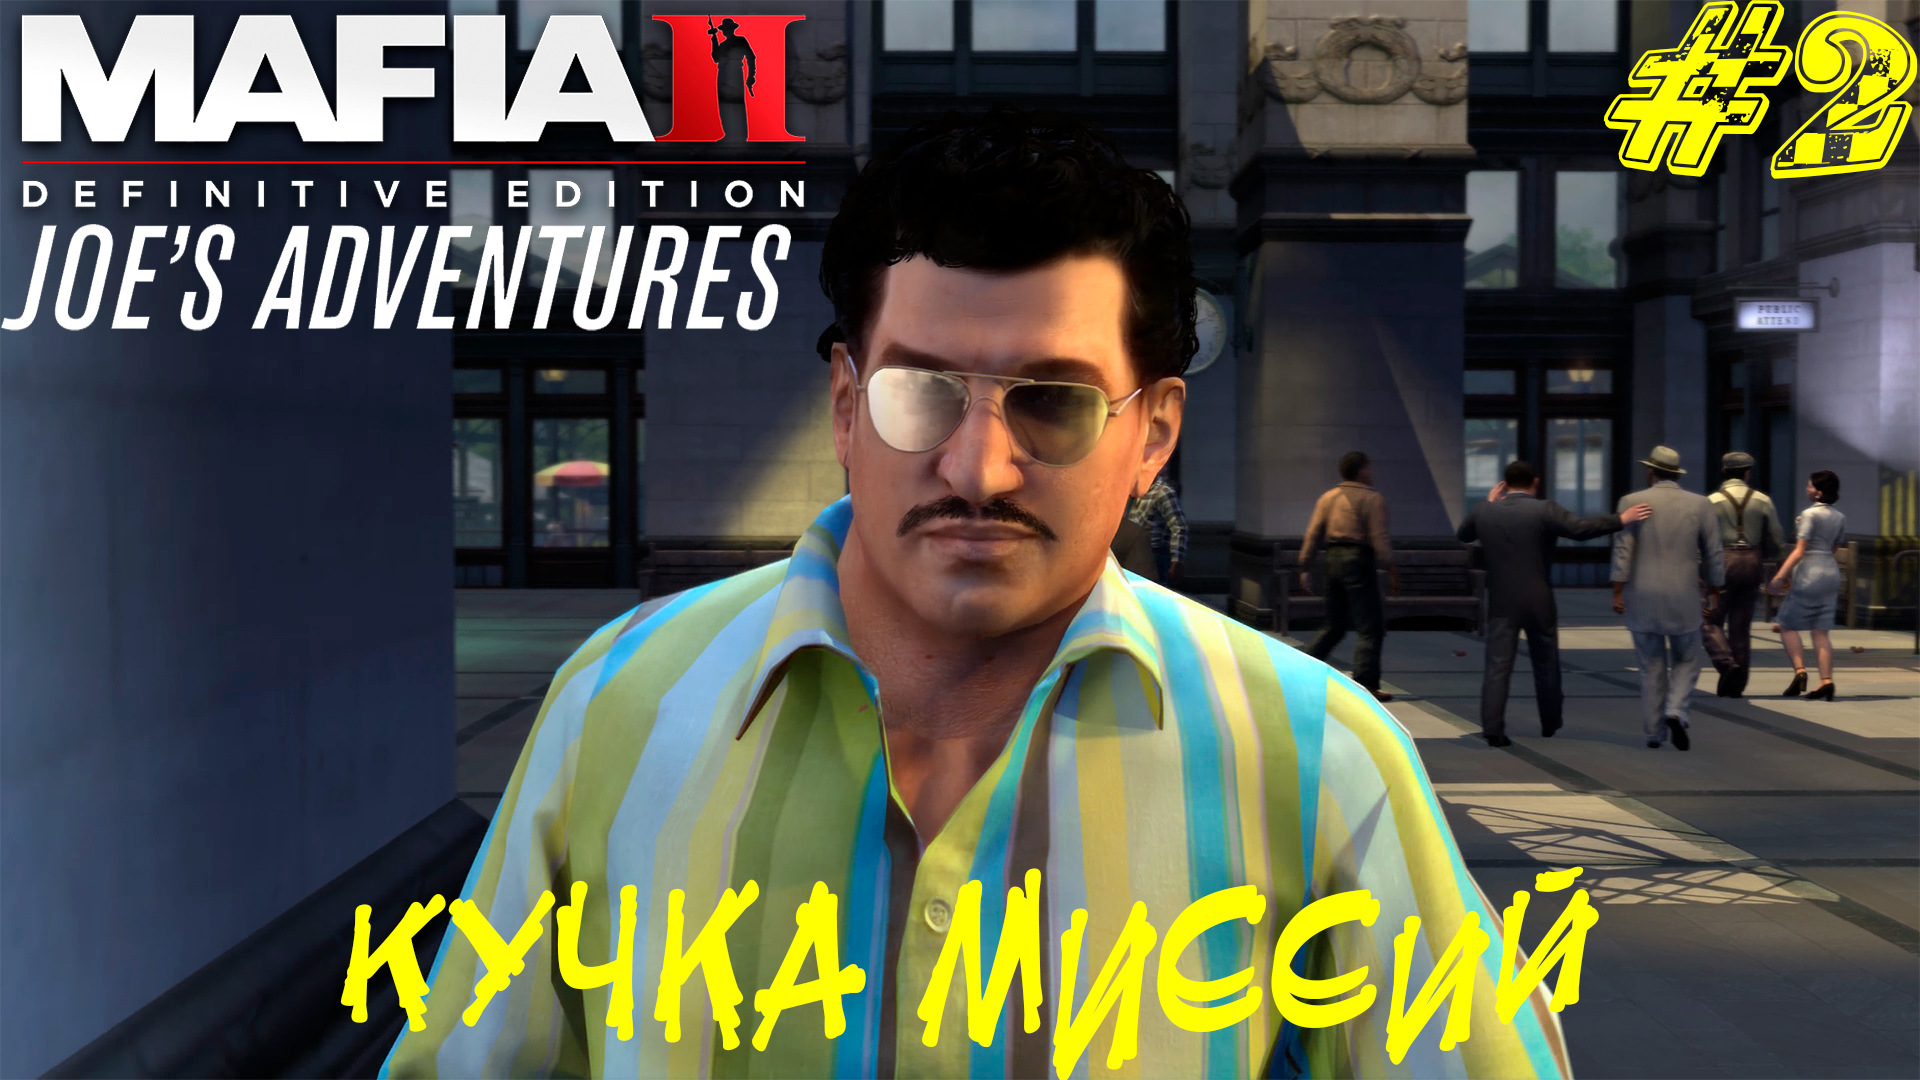 КУЧКА МИССИЙ ➤ Mafia 2 Joe's Adventure Прохождение #2